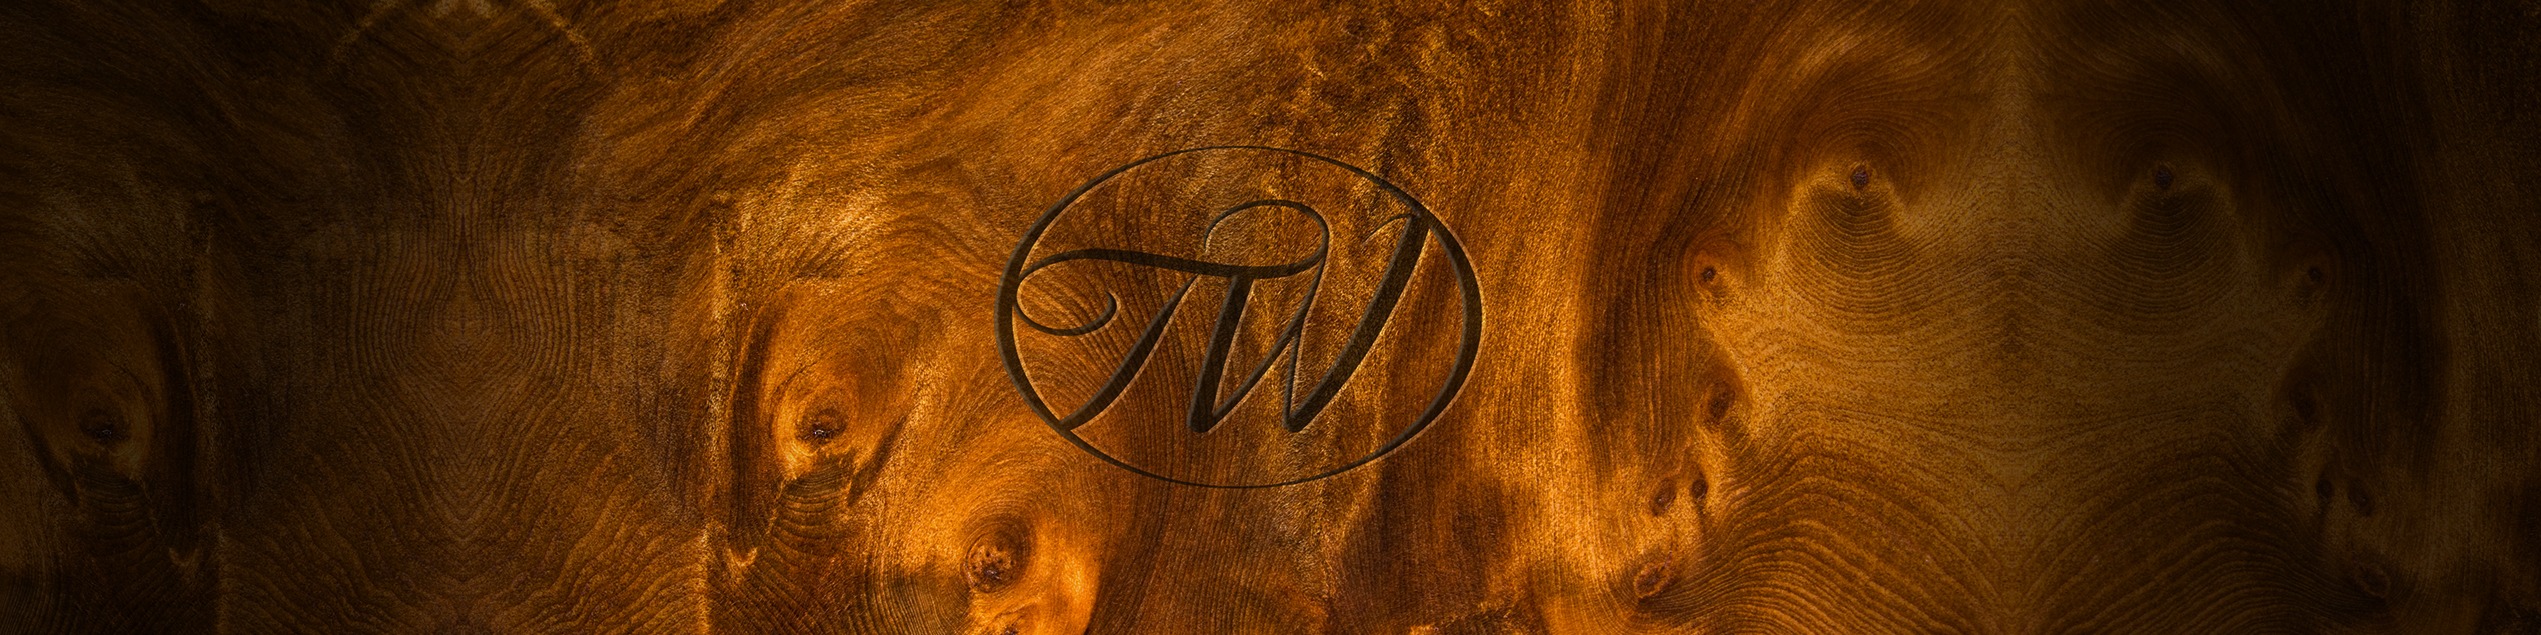 embossed logo on wood wide